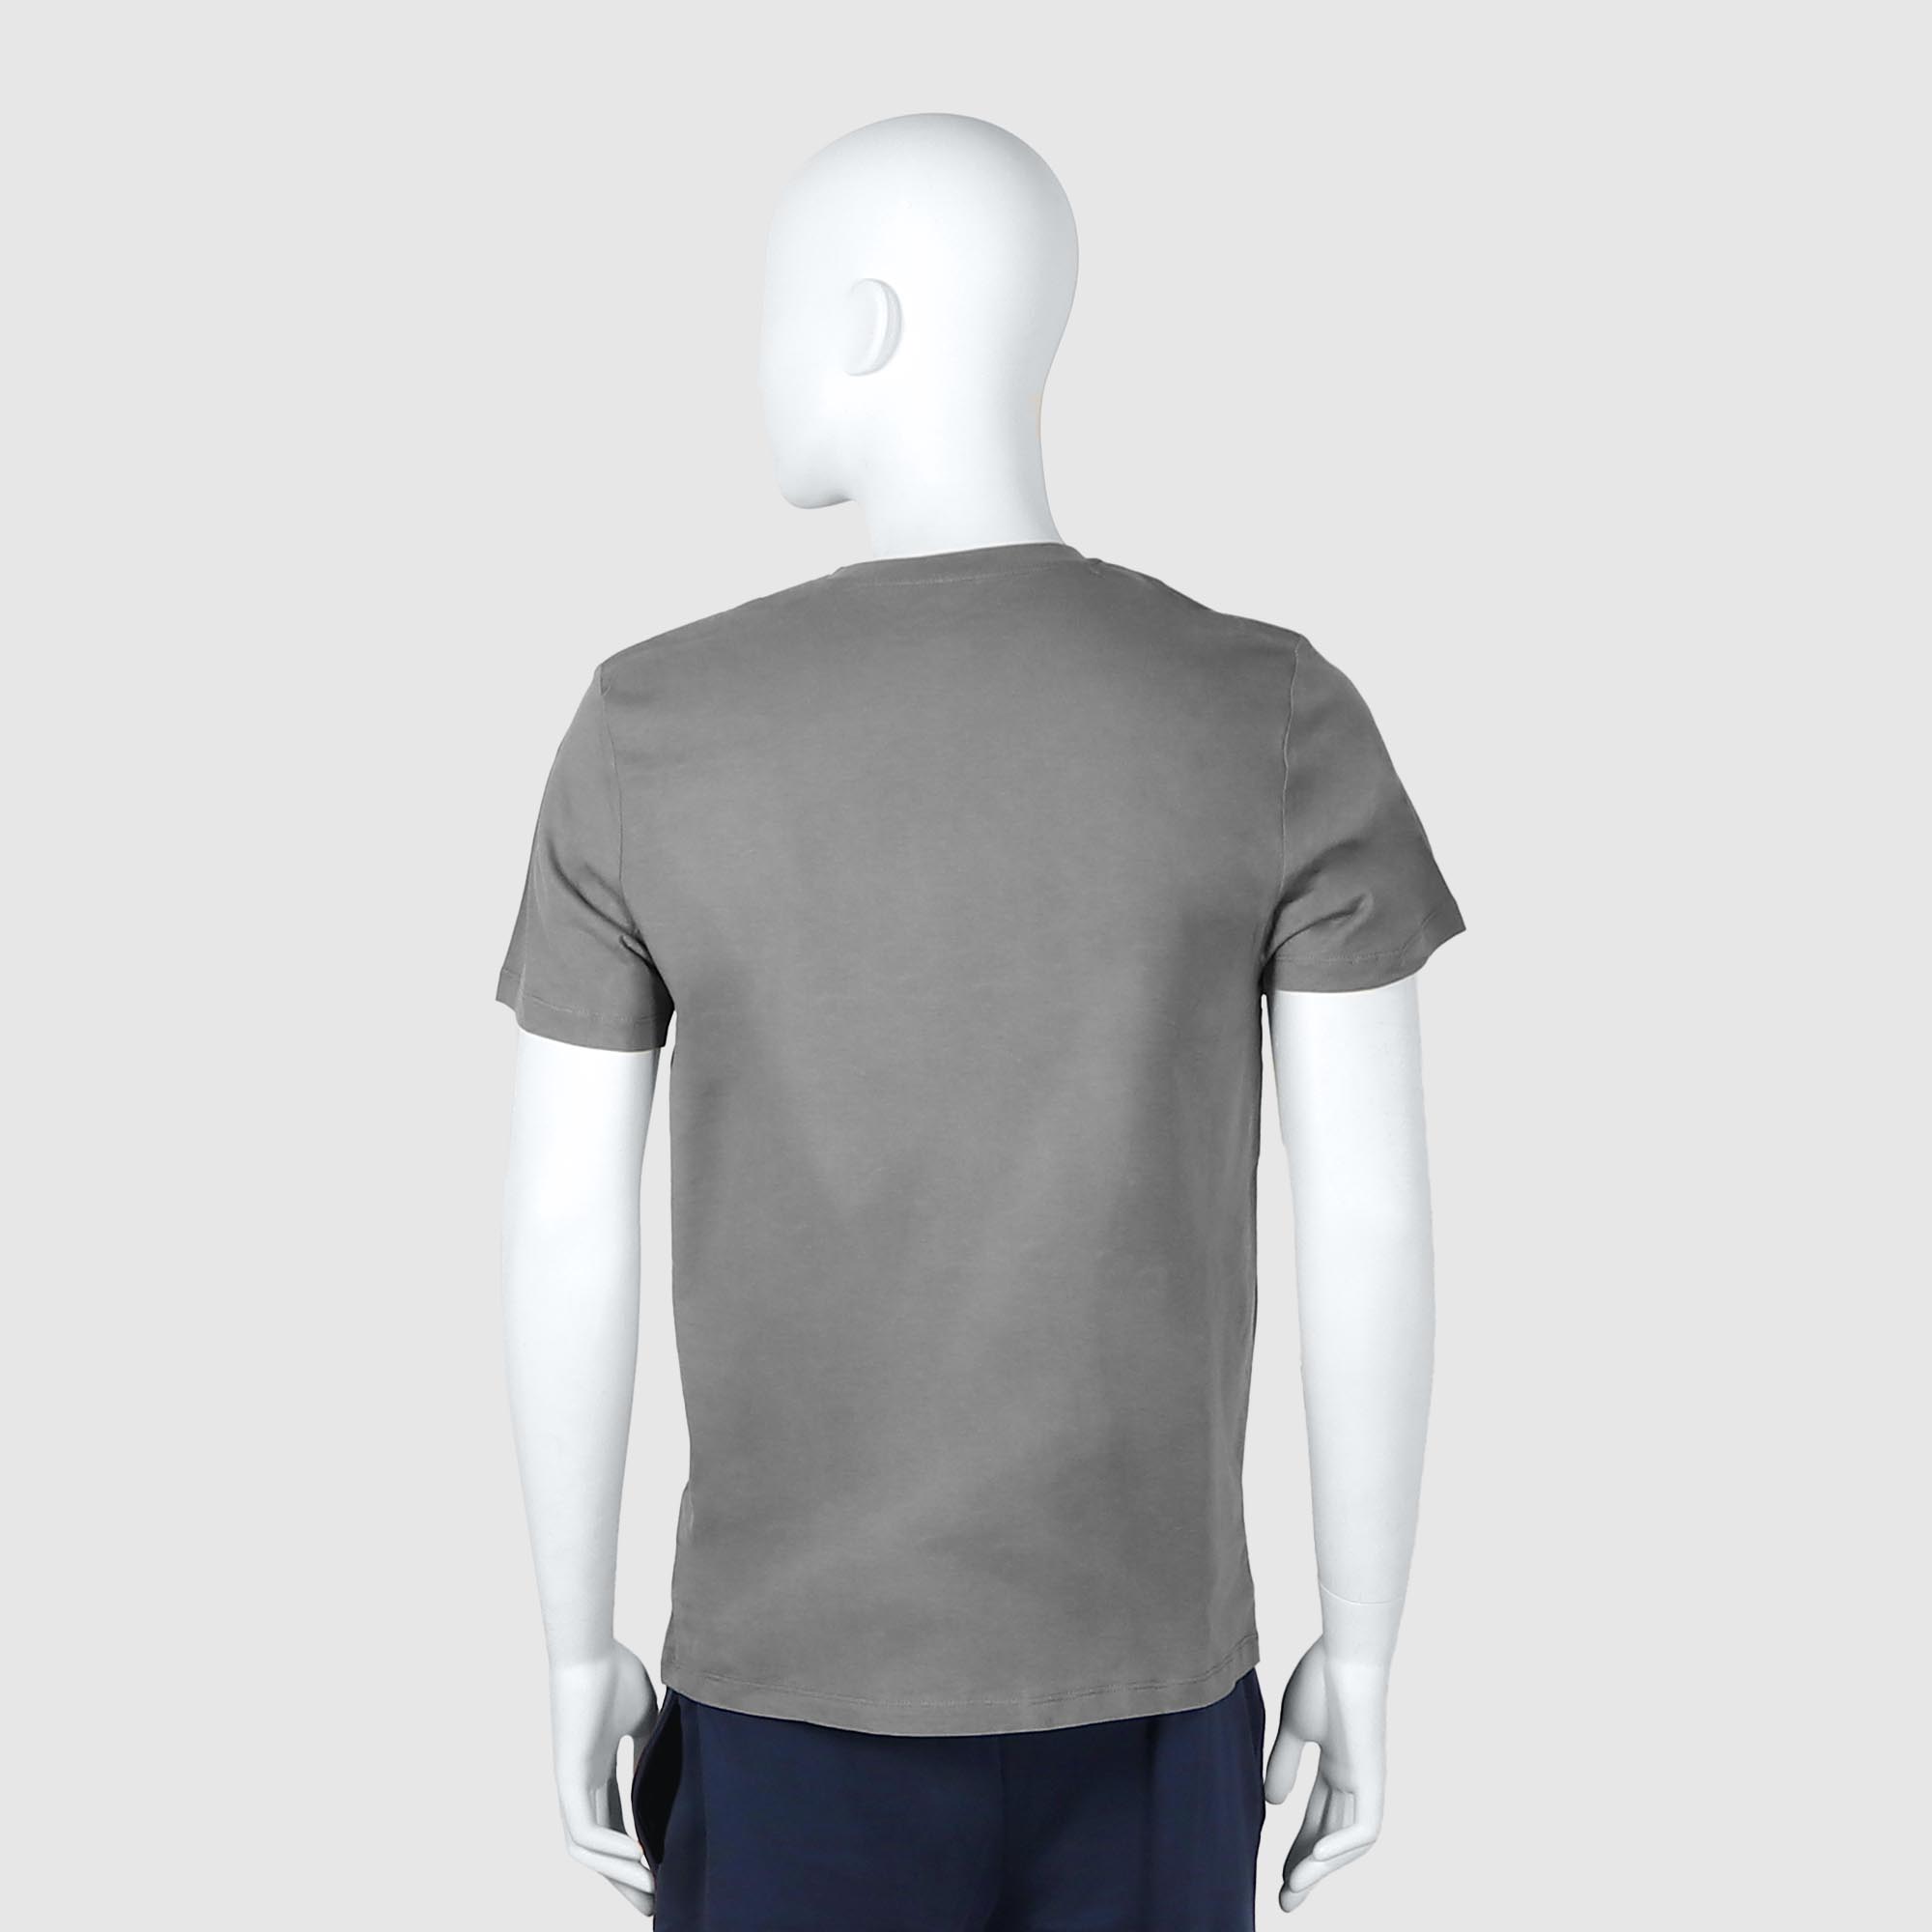 Мужская футболка Diva Teks серая (DTD-04), цвет серый, размер 40-52 - фото 2